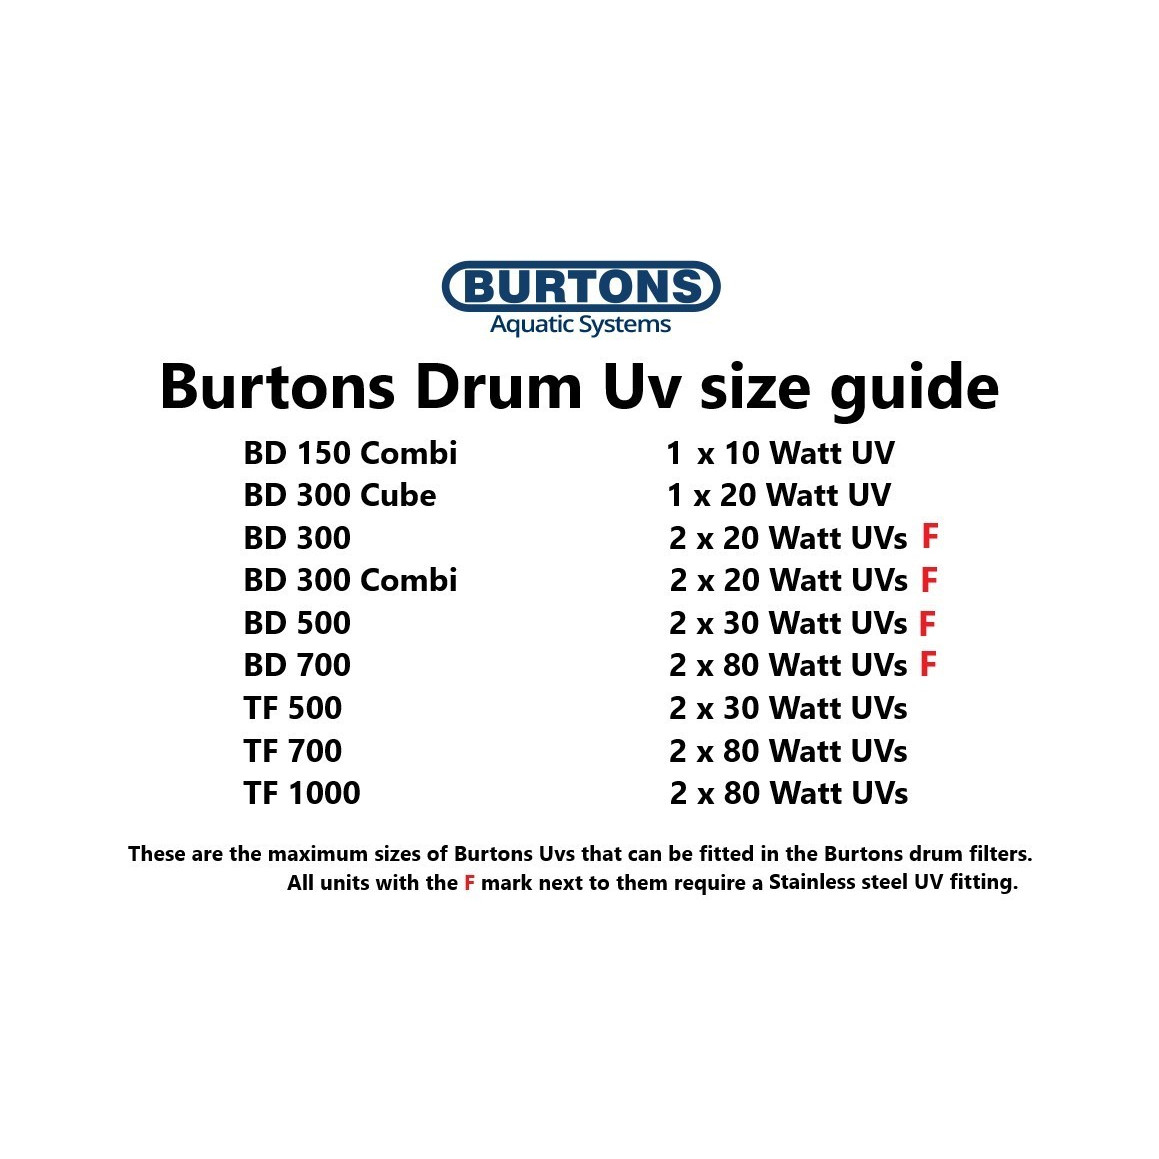 burtons_drum-uv_size_guide_6